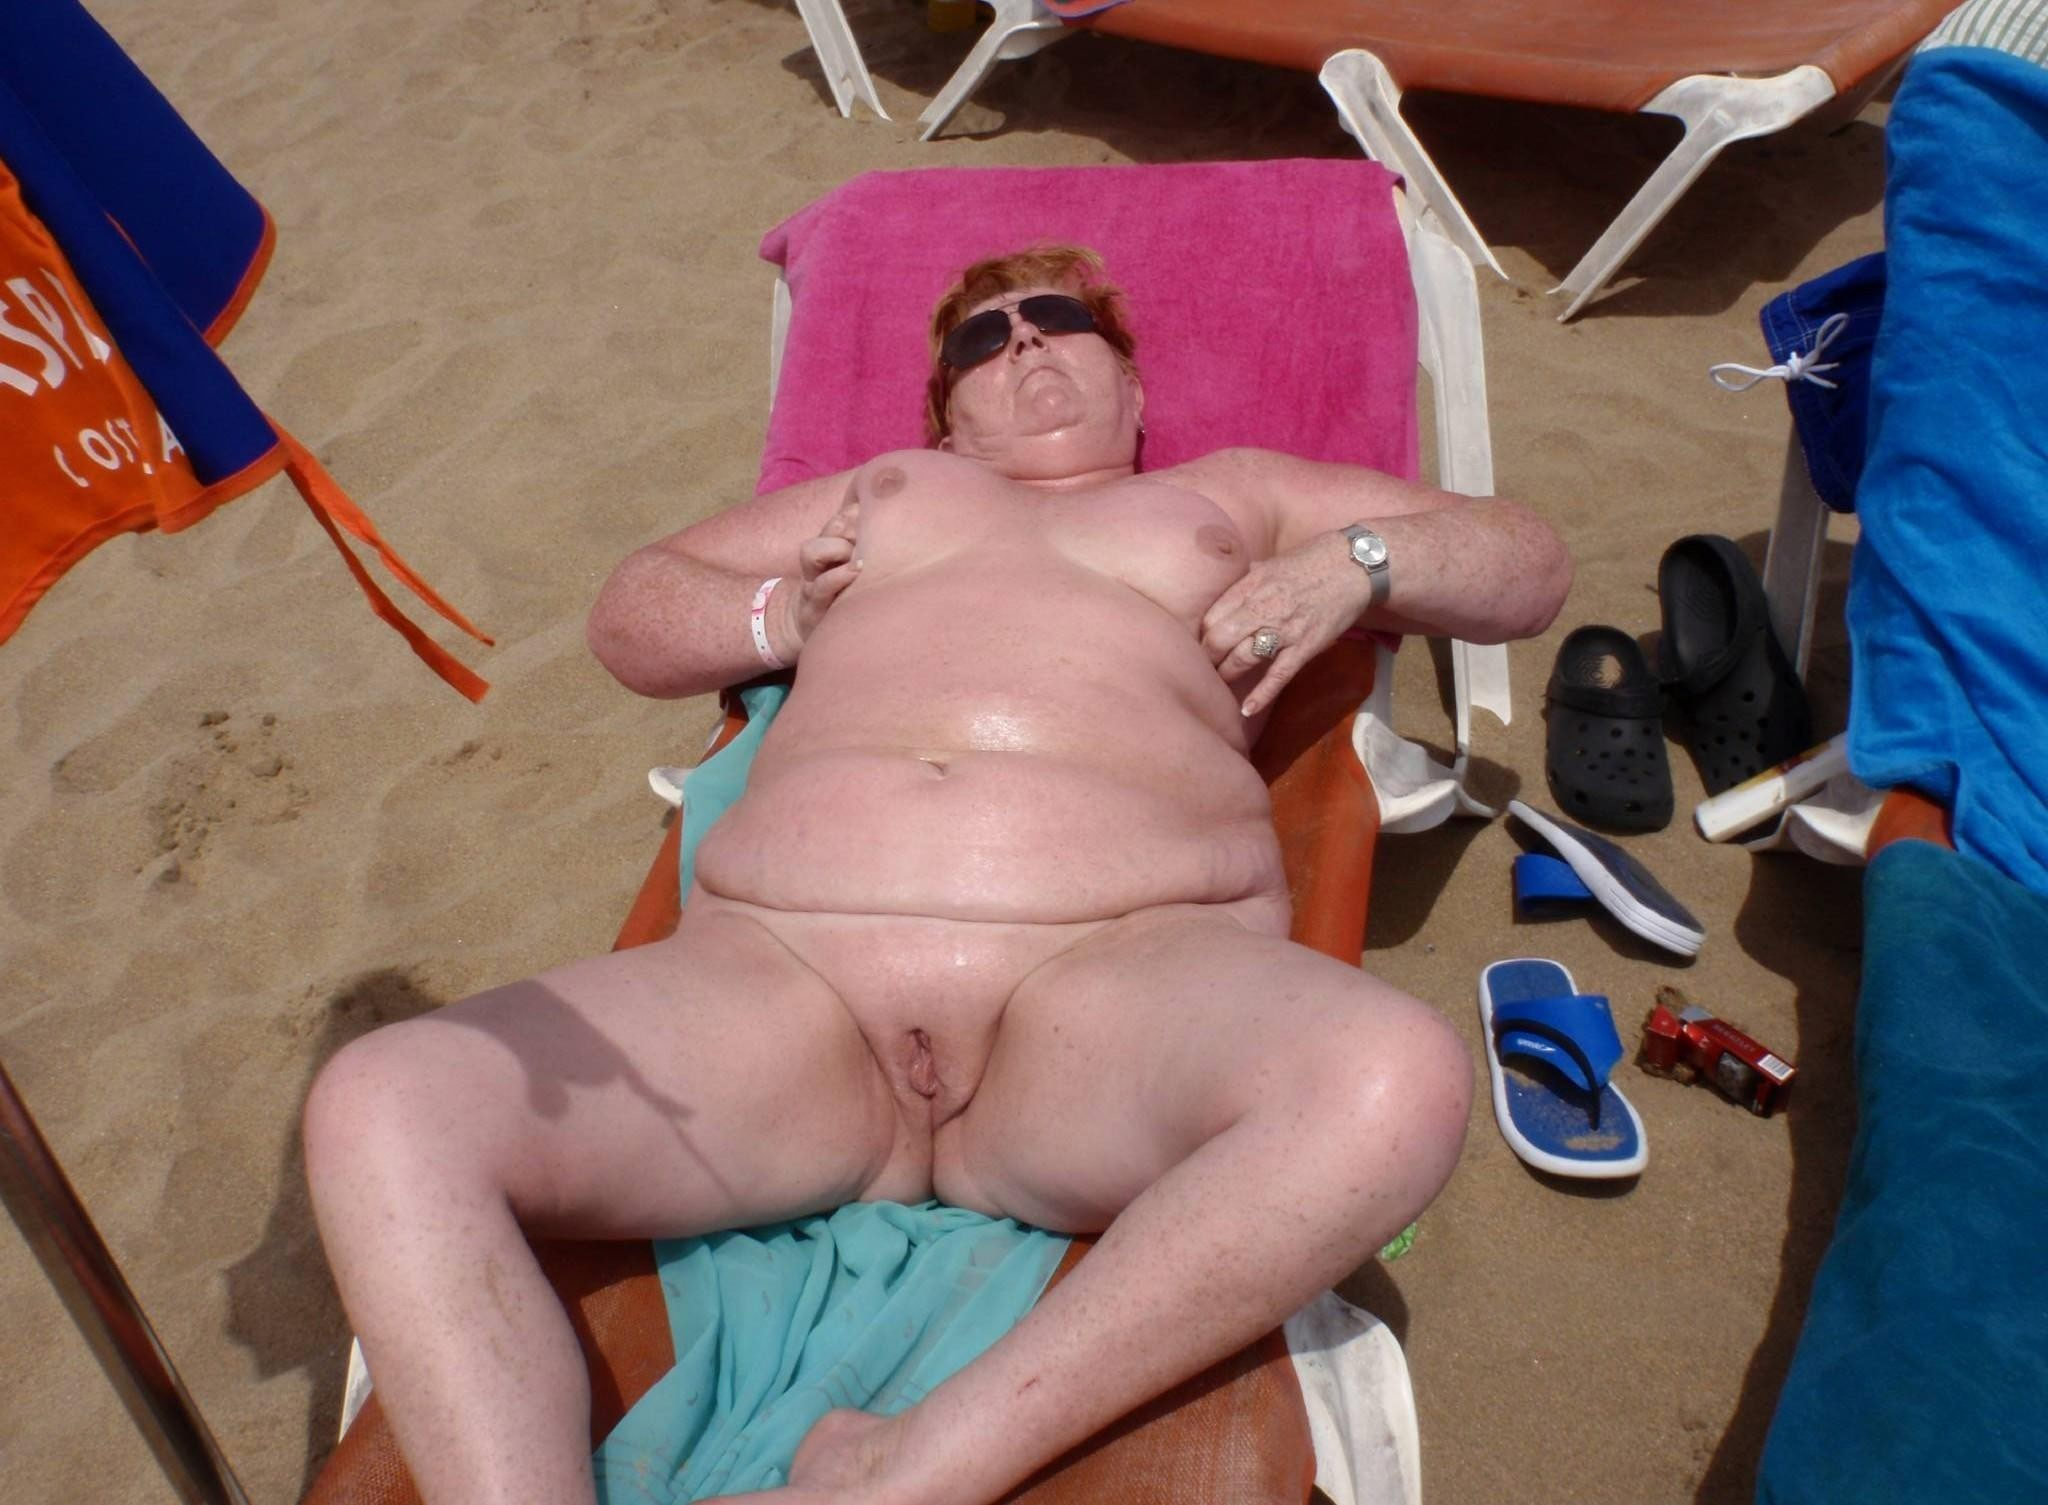 Fat Chicks Nude Outdoors - Fat women over 50 on a nudist beach